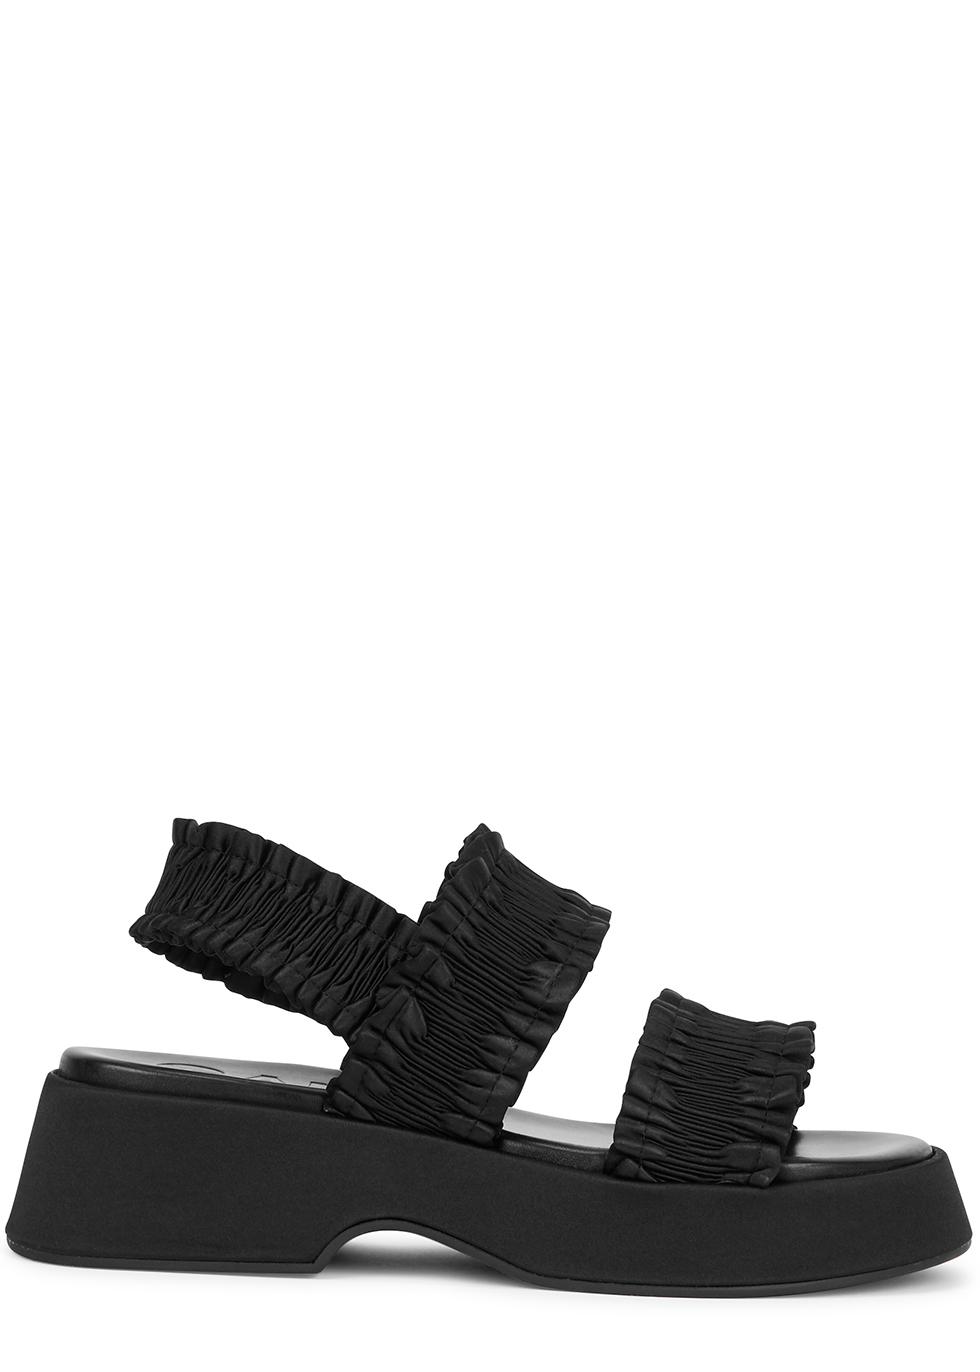 Ganni Smocked Satin Flatform Sandals in Black | Lyst